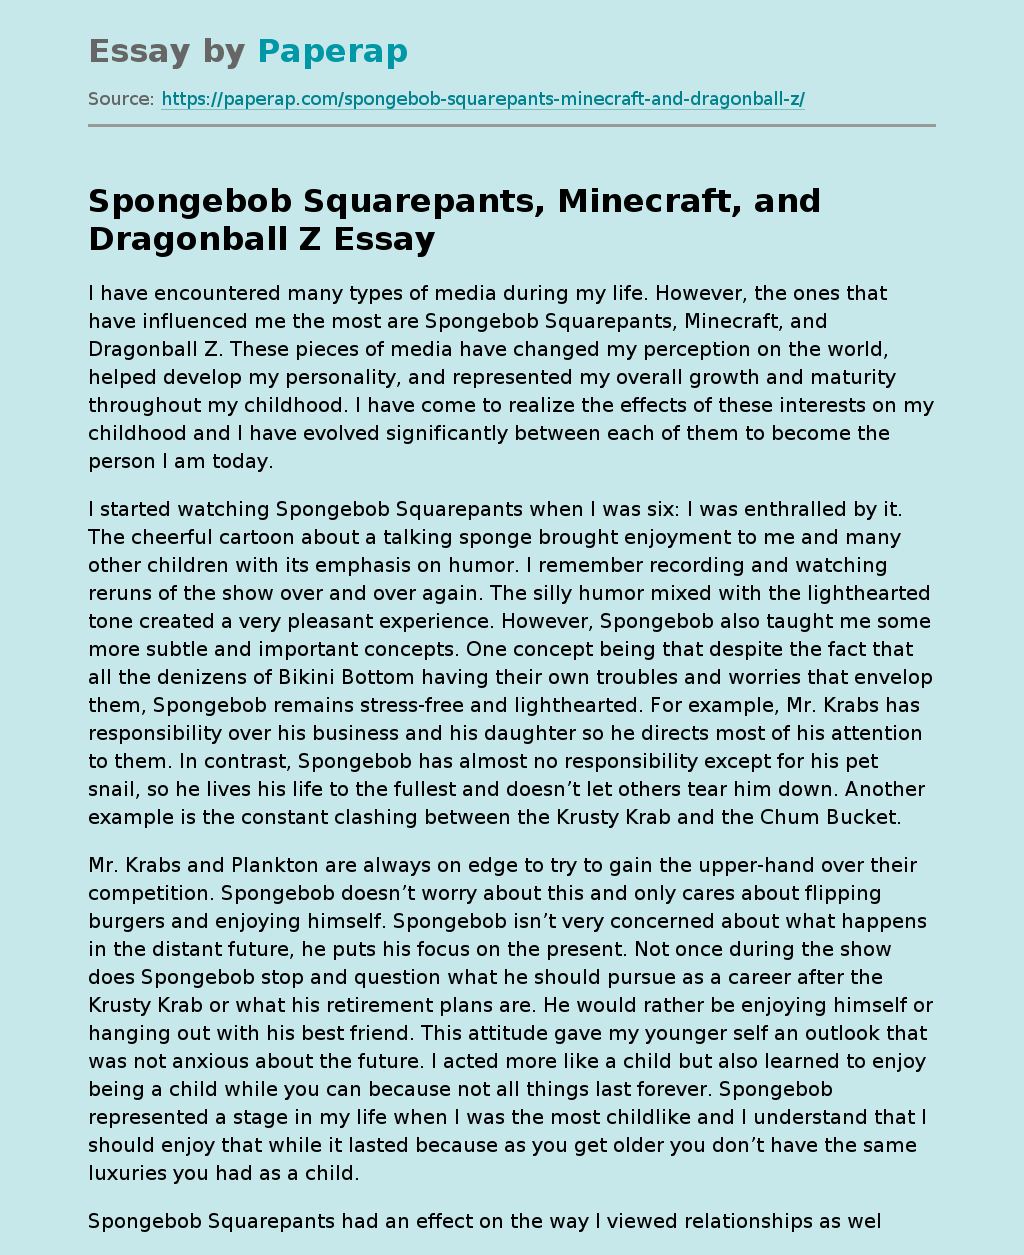 Spongebob Squarepants, Minecraft, and Dragonball Z